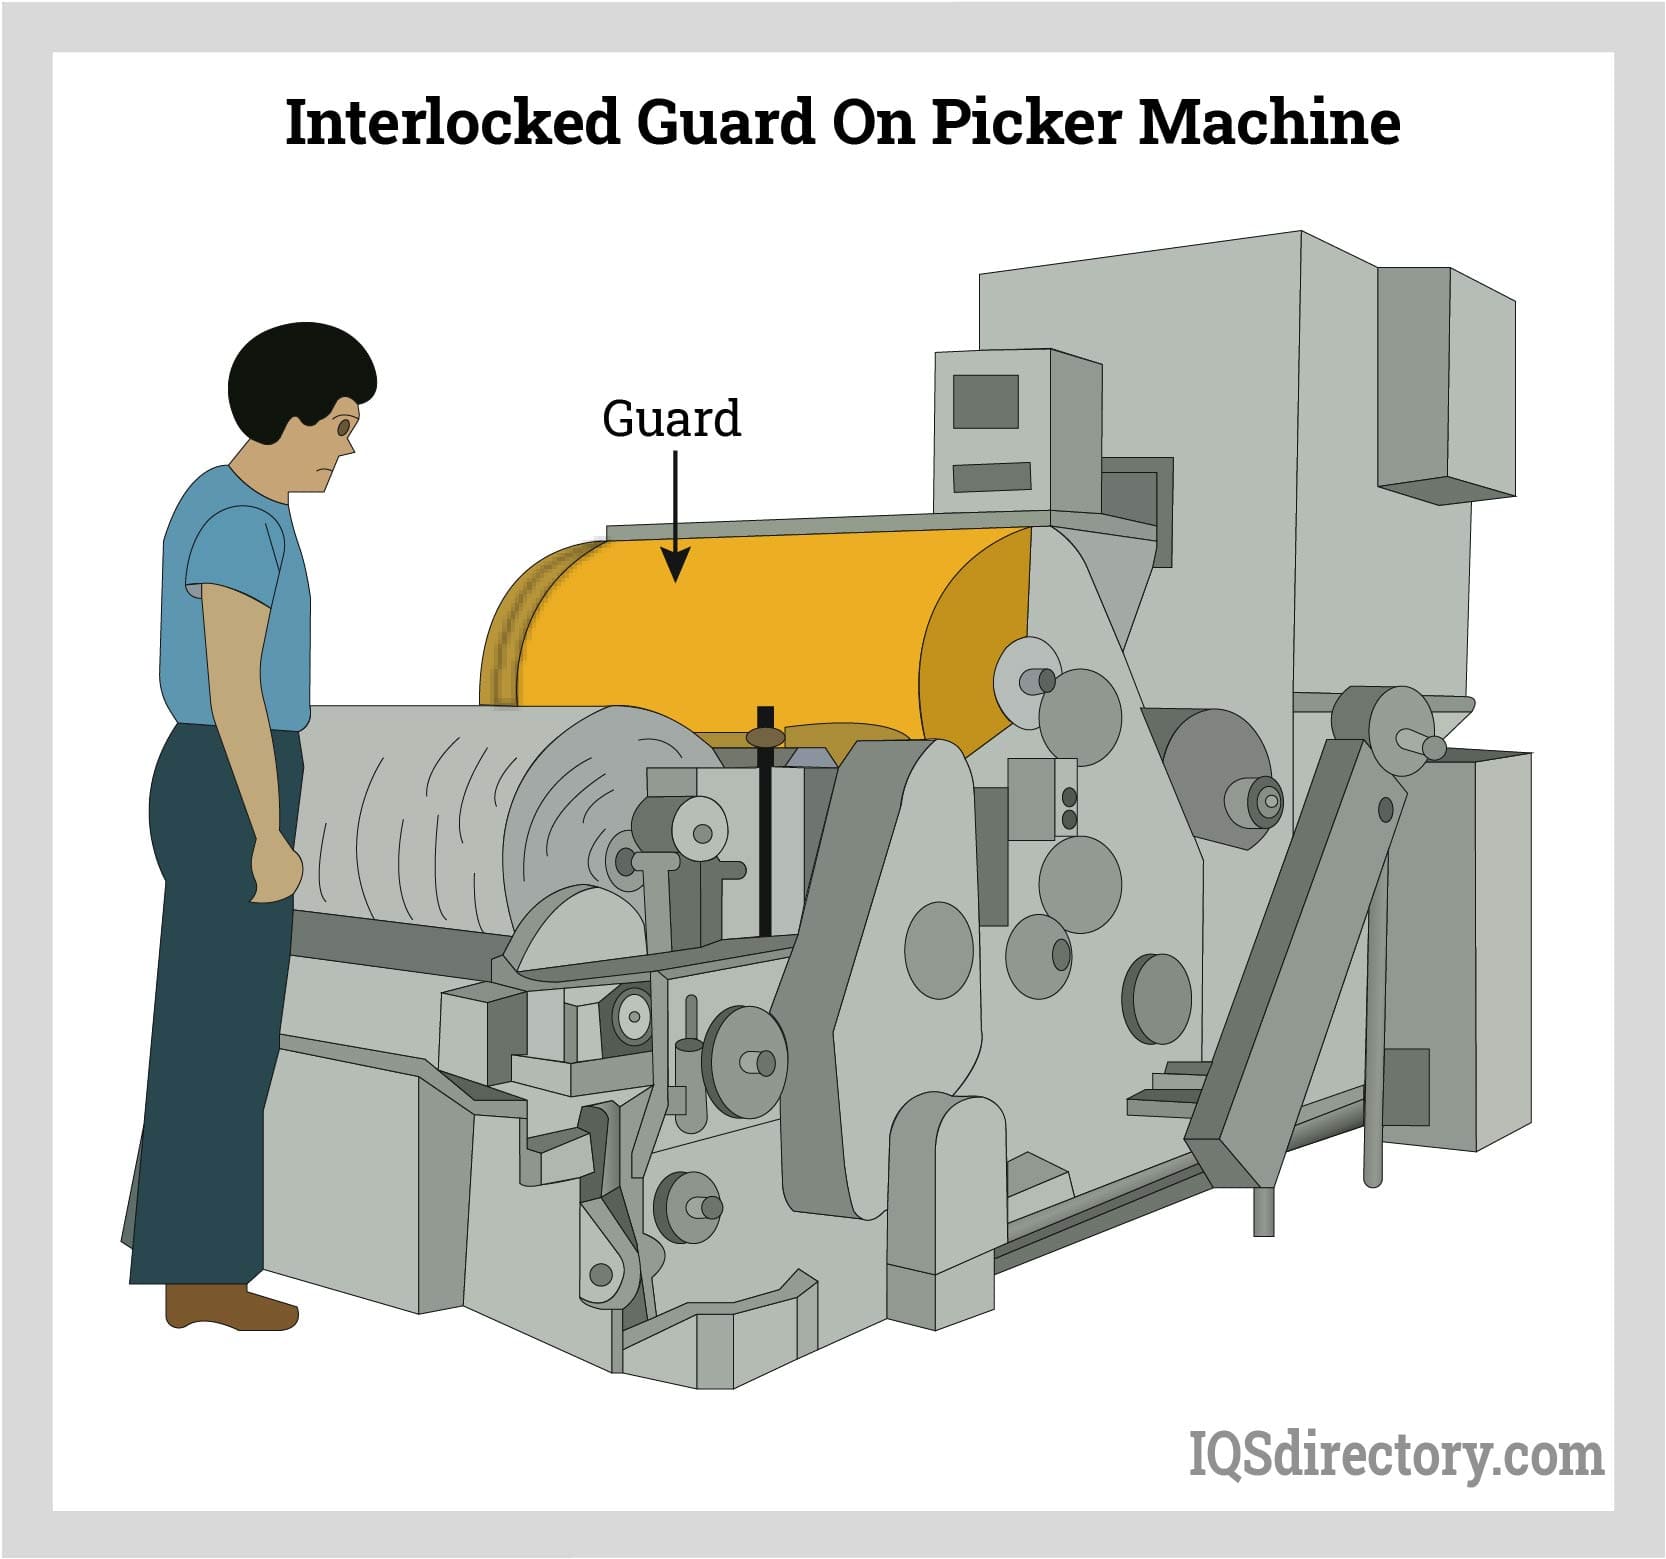 Interlocked Guard on Picker Machine